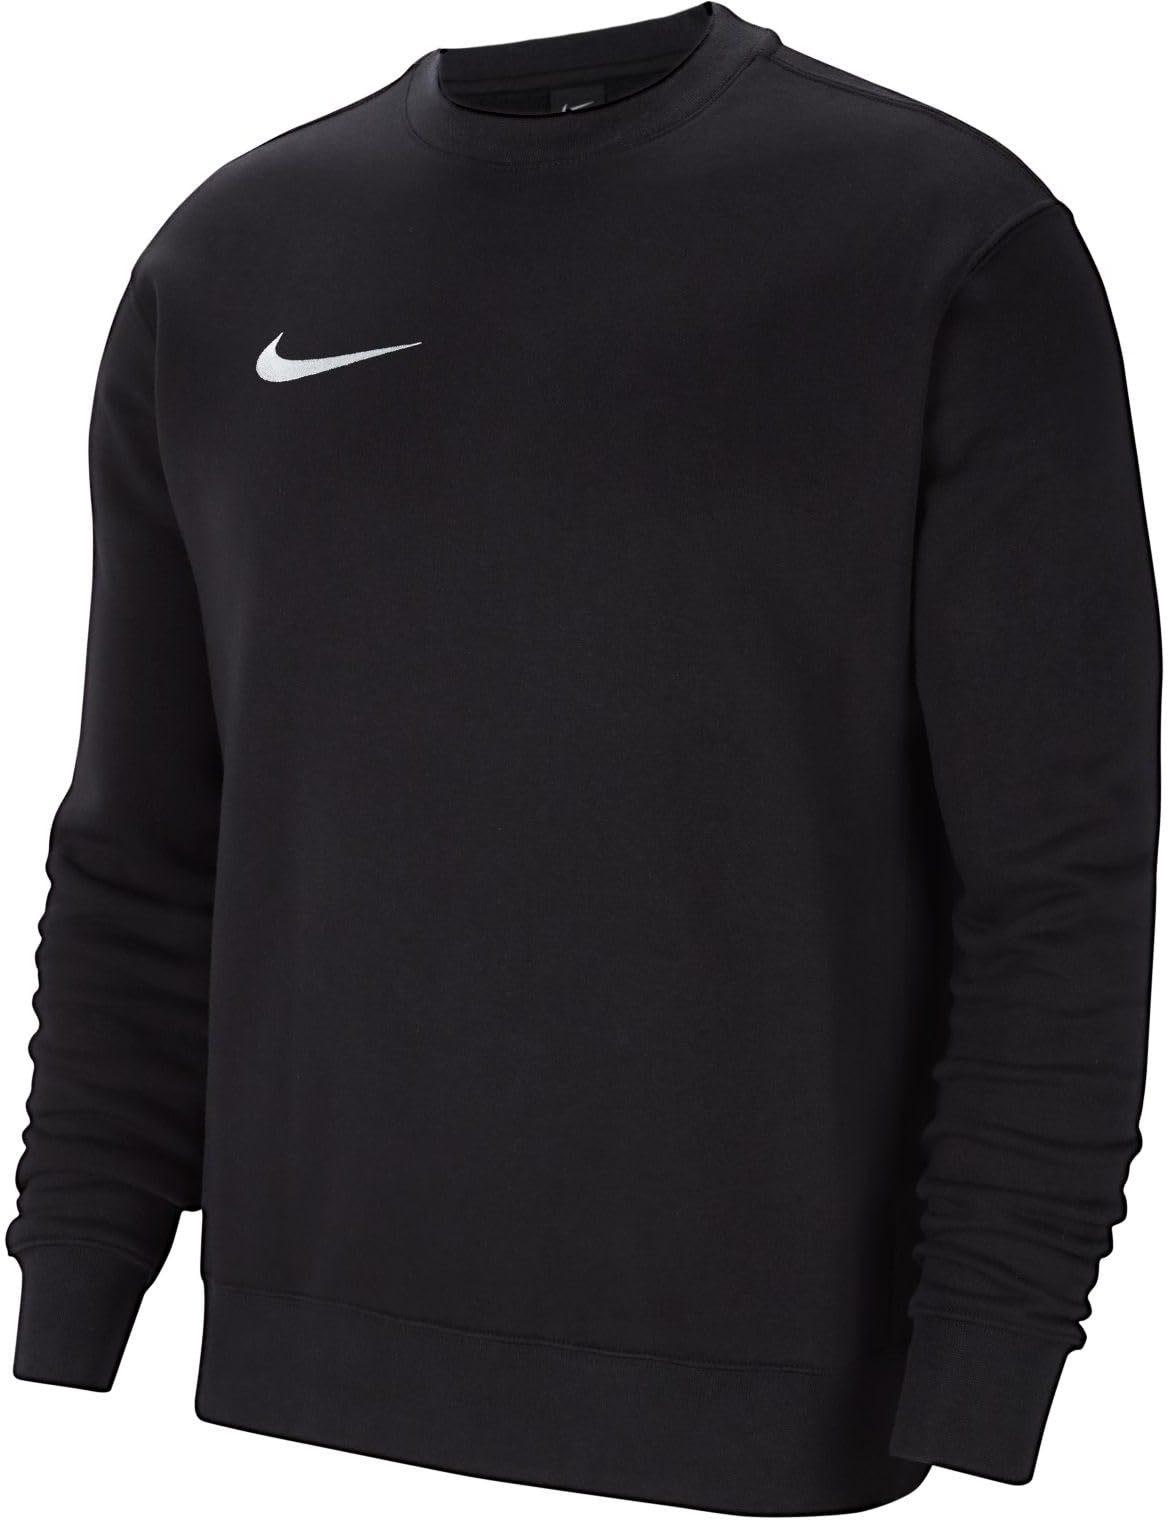 Nike Unisex-Child Y Nk FLC Park20 Fz Hoodie Hooded Sweatshirt, Black/White, XS (122-128 cm)